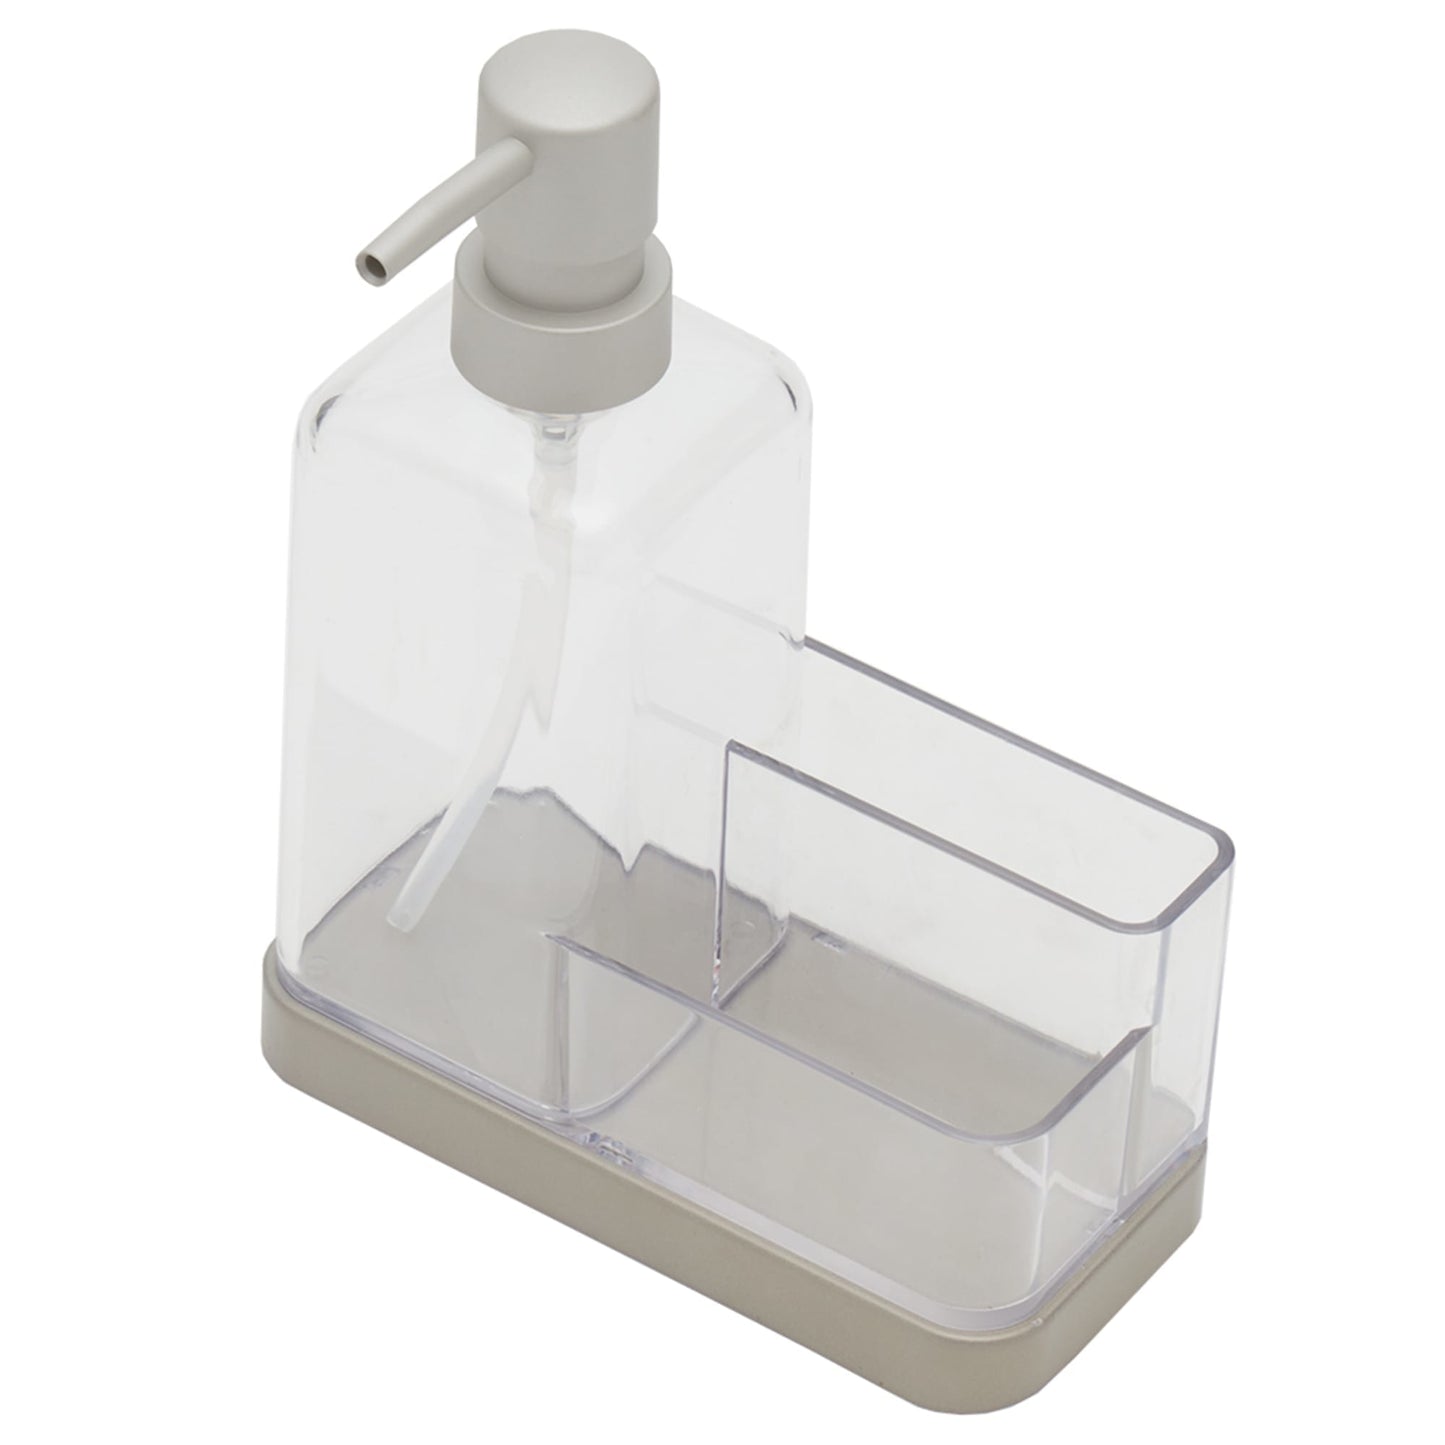 13.5 oz. Plastic Soap Dispenser with Sponge Compartment, Satin Nickel